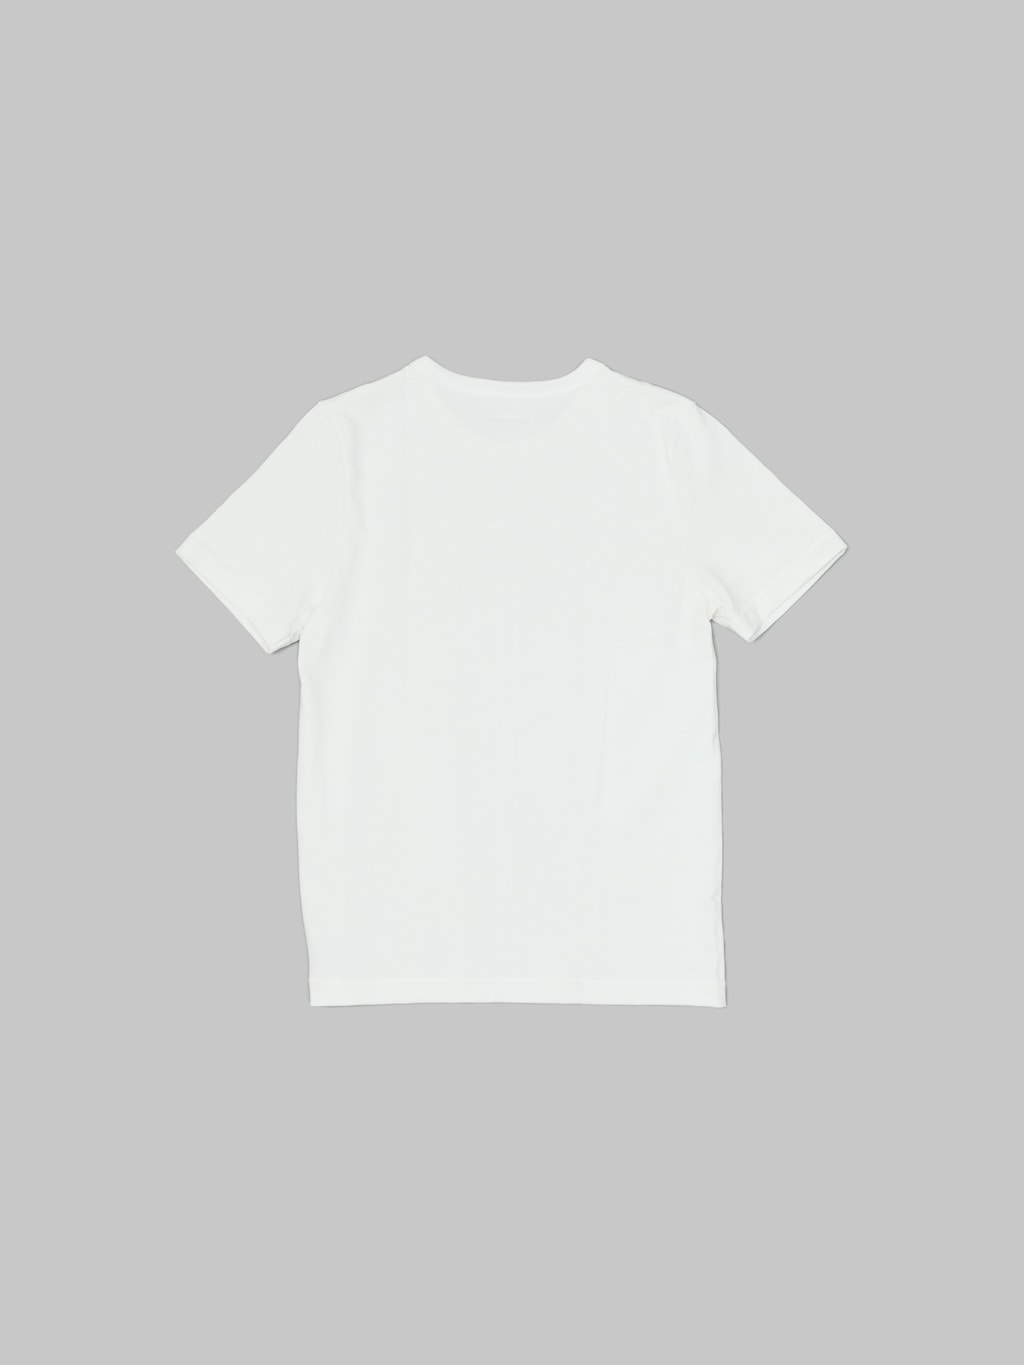 merz b schwanen 2S14 loopwheeled Tshirt cotton white  back